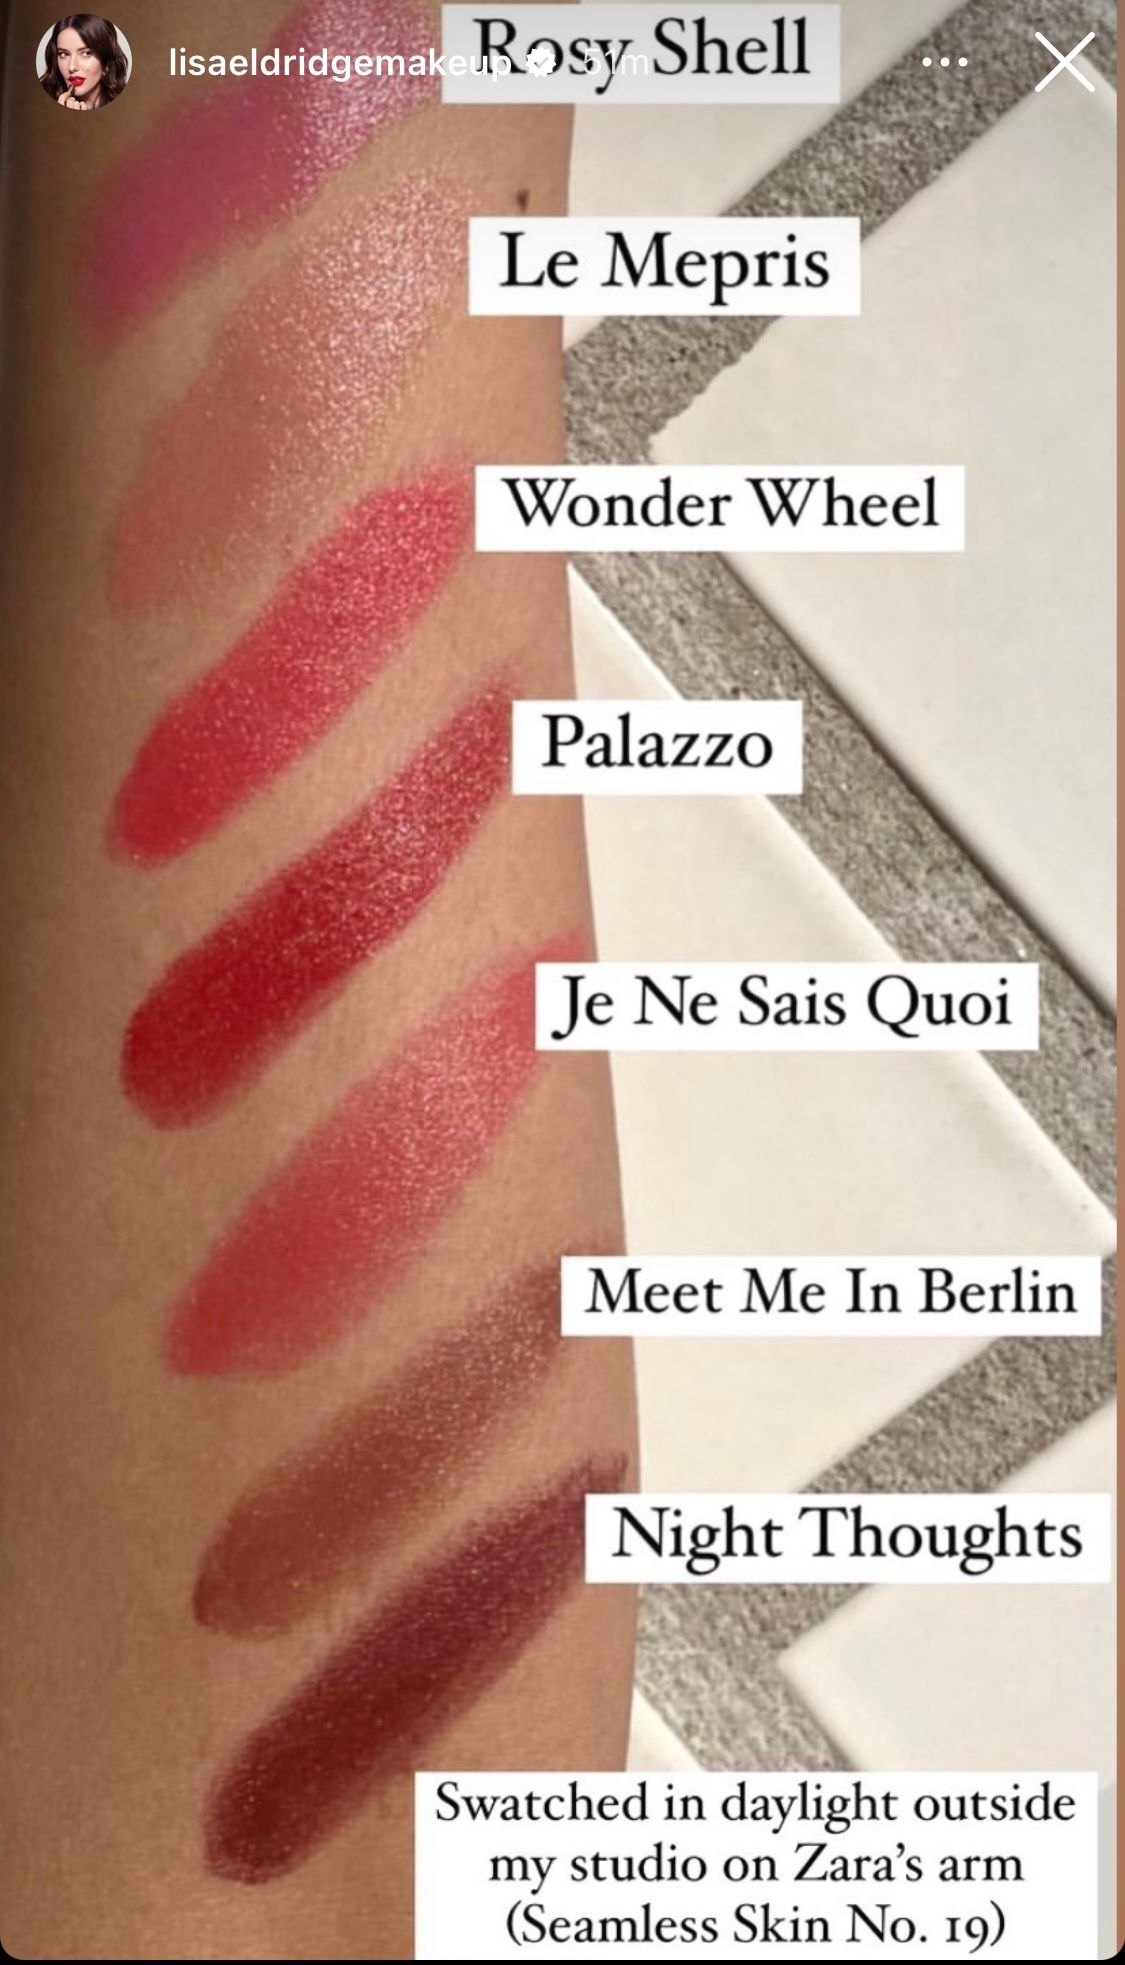 Re: Lisa Eldridge lipsticks - Page 18 - Beauty Insider Community